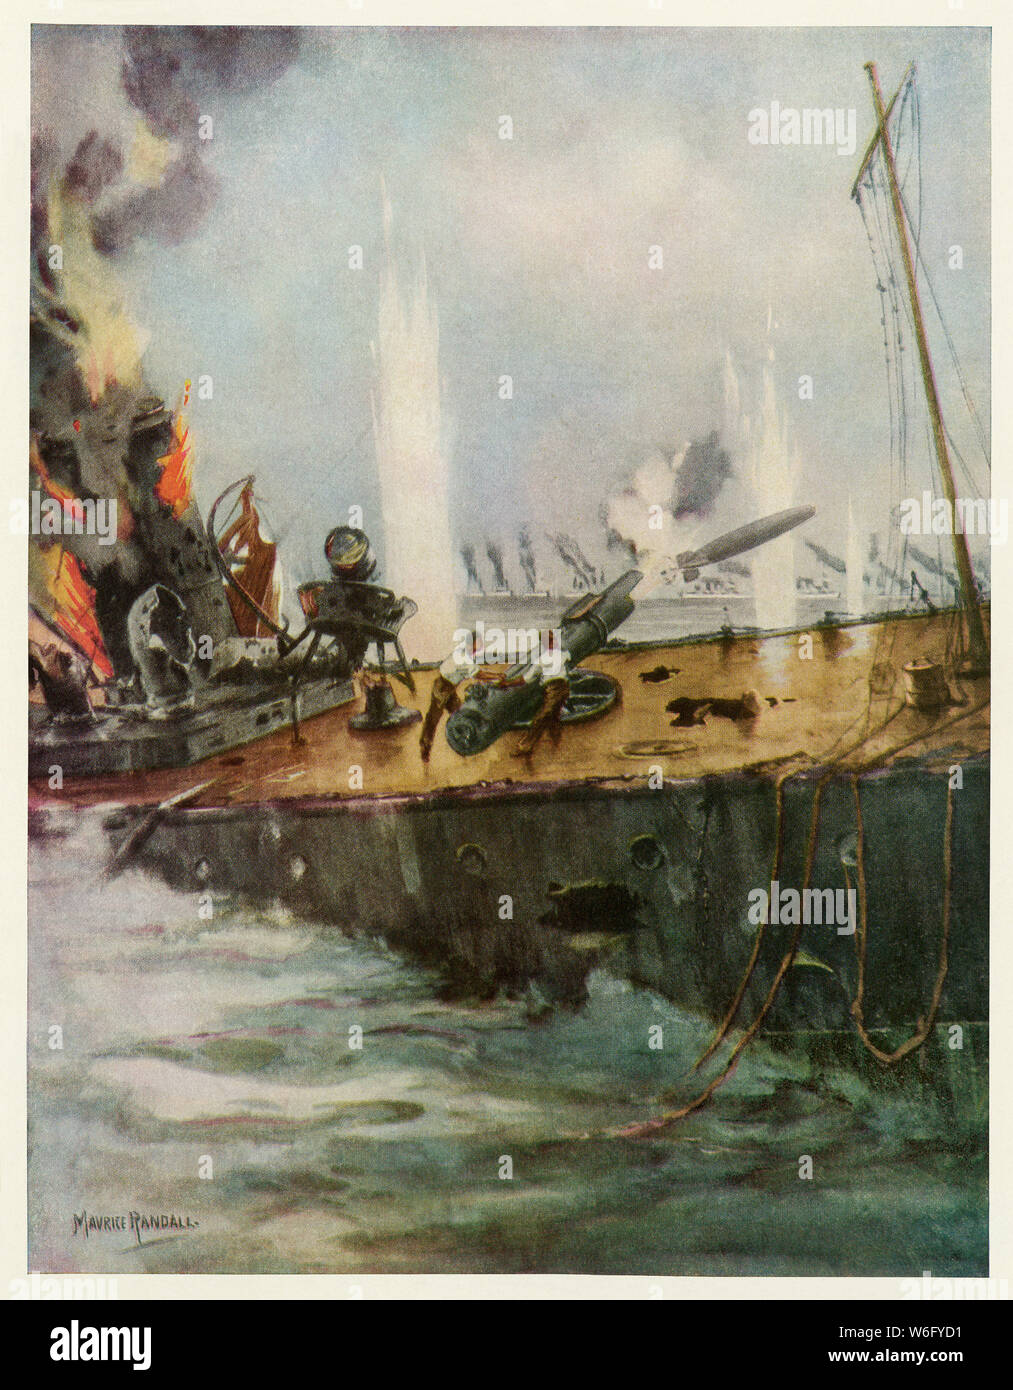 HMS Shark firing its last torpedo, battle of Jutland, World War I. Color halftone of an illustration Stock Photo